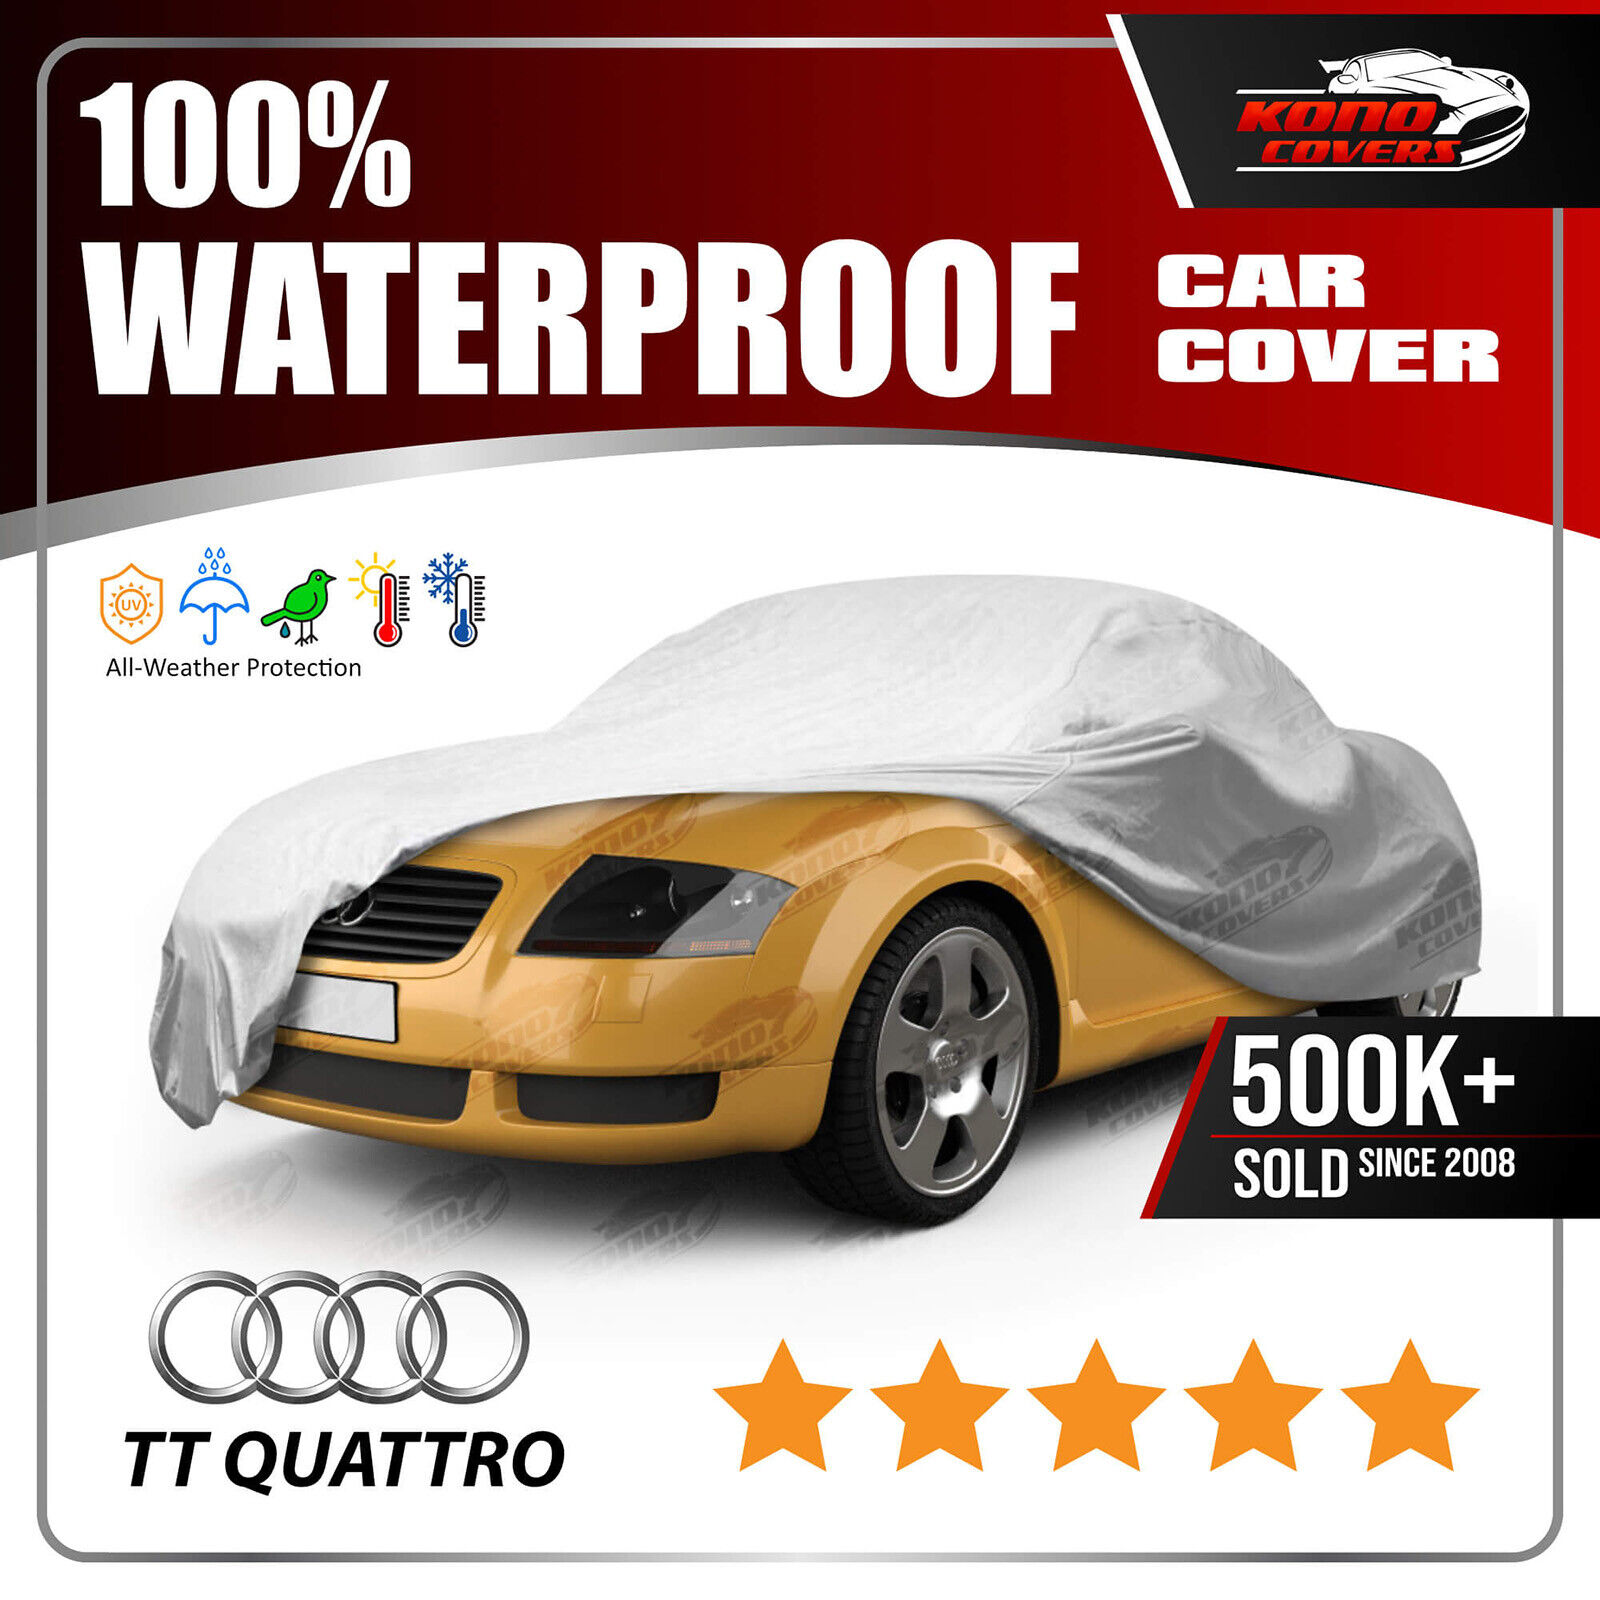 AUDI TT 1999-2006 CAR COVER - 100% Waterproof 100% Breathable